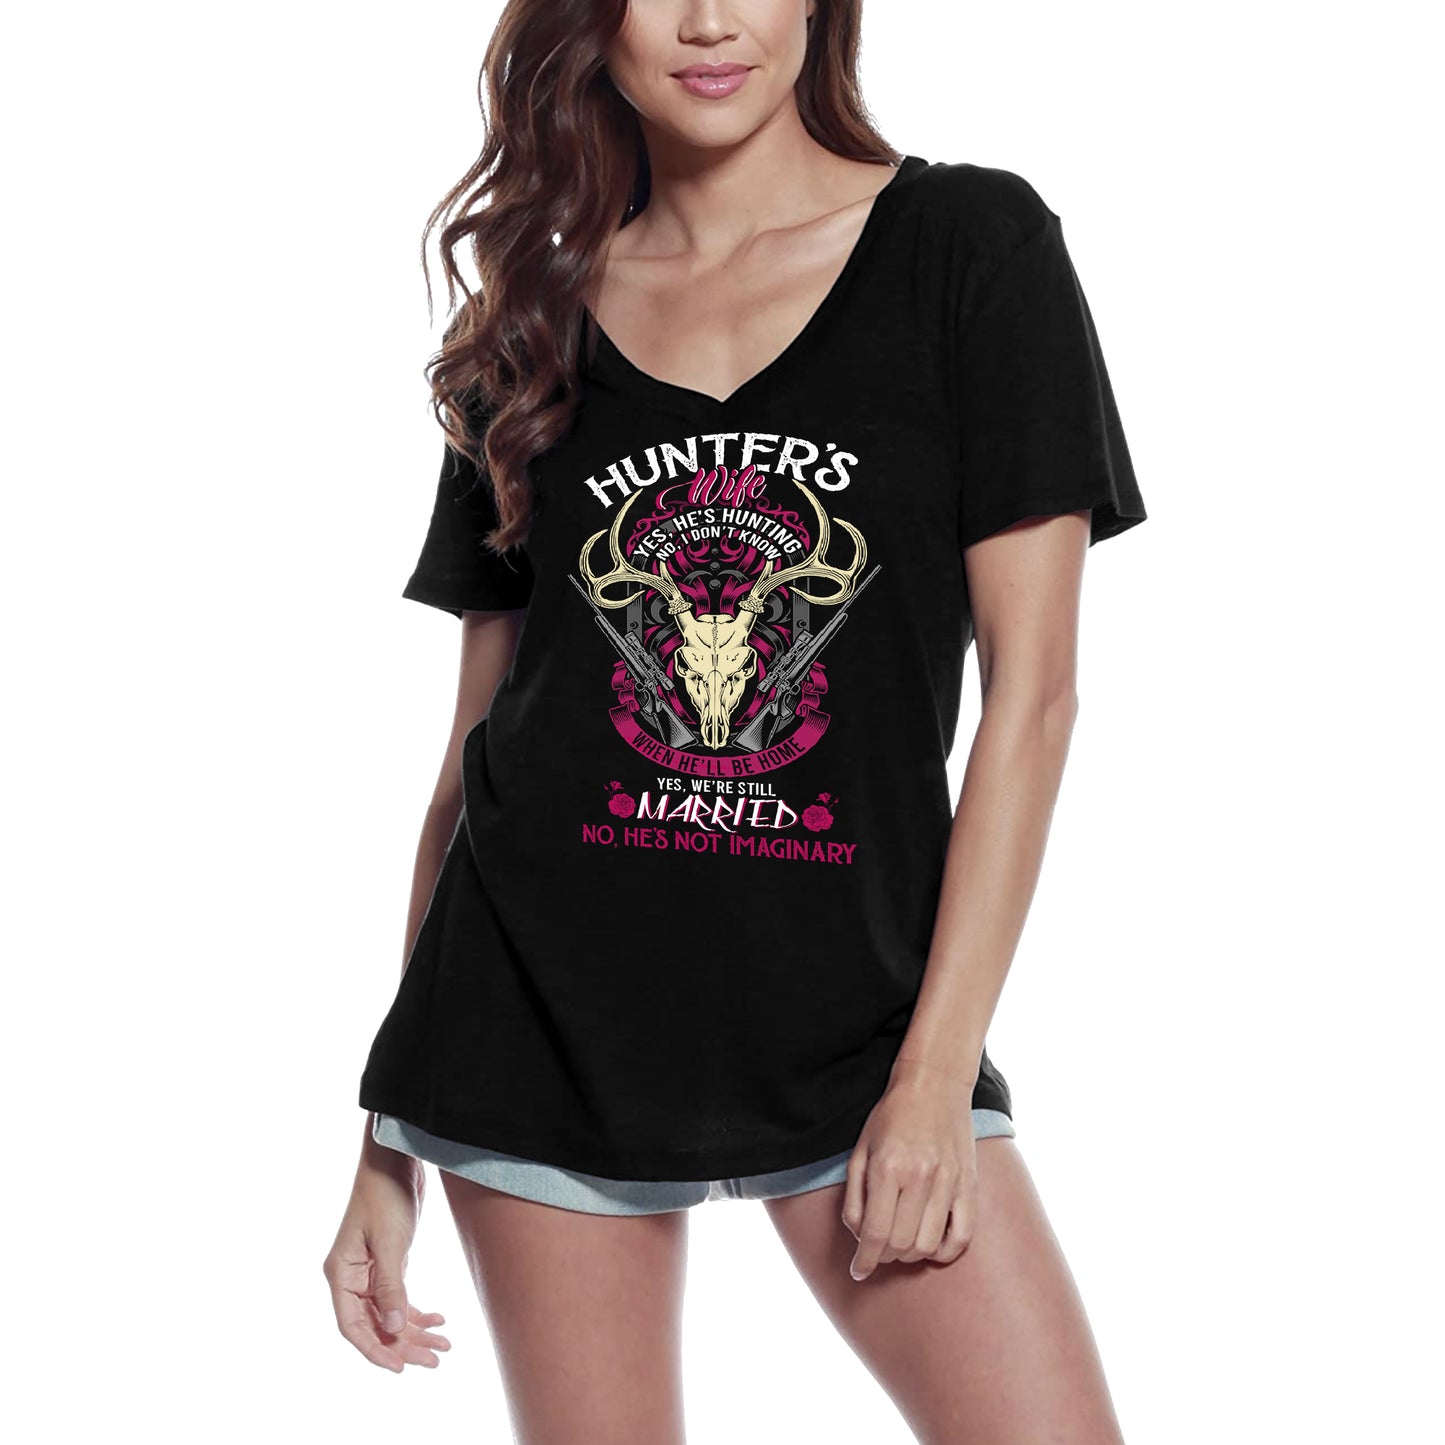 ULTRABASIC Women's T-Shirt Hunter's Wife - Funny Humor Short Sleeve Tee Shirt Tops